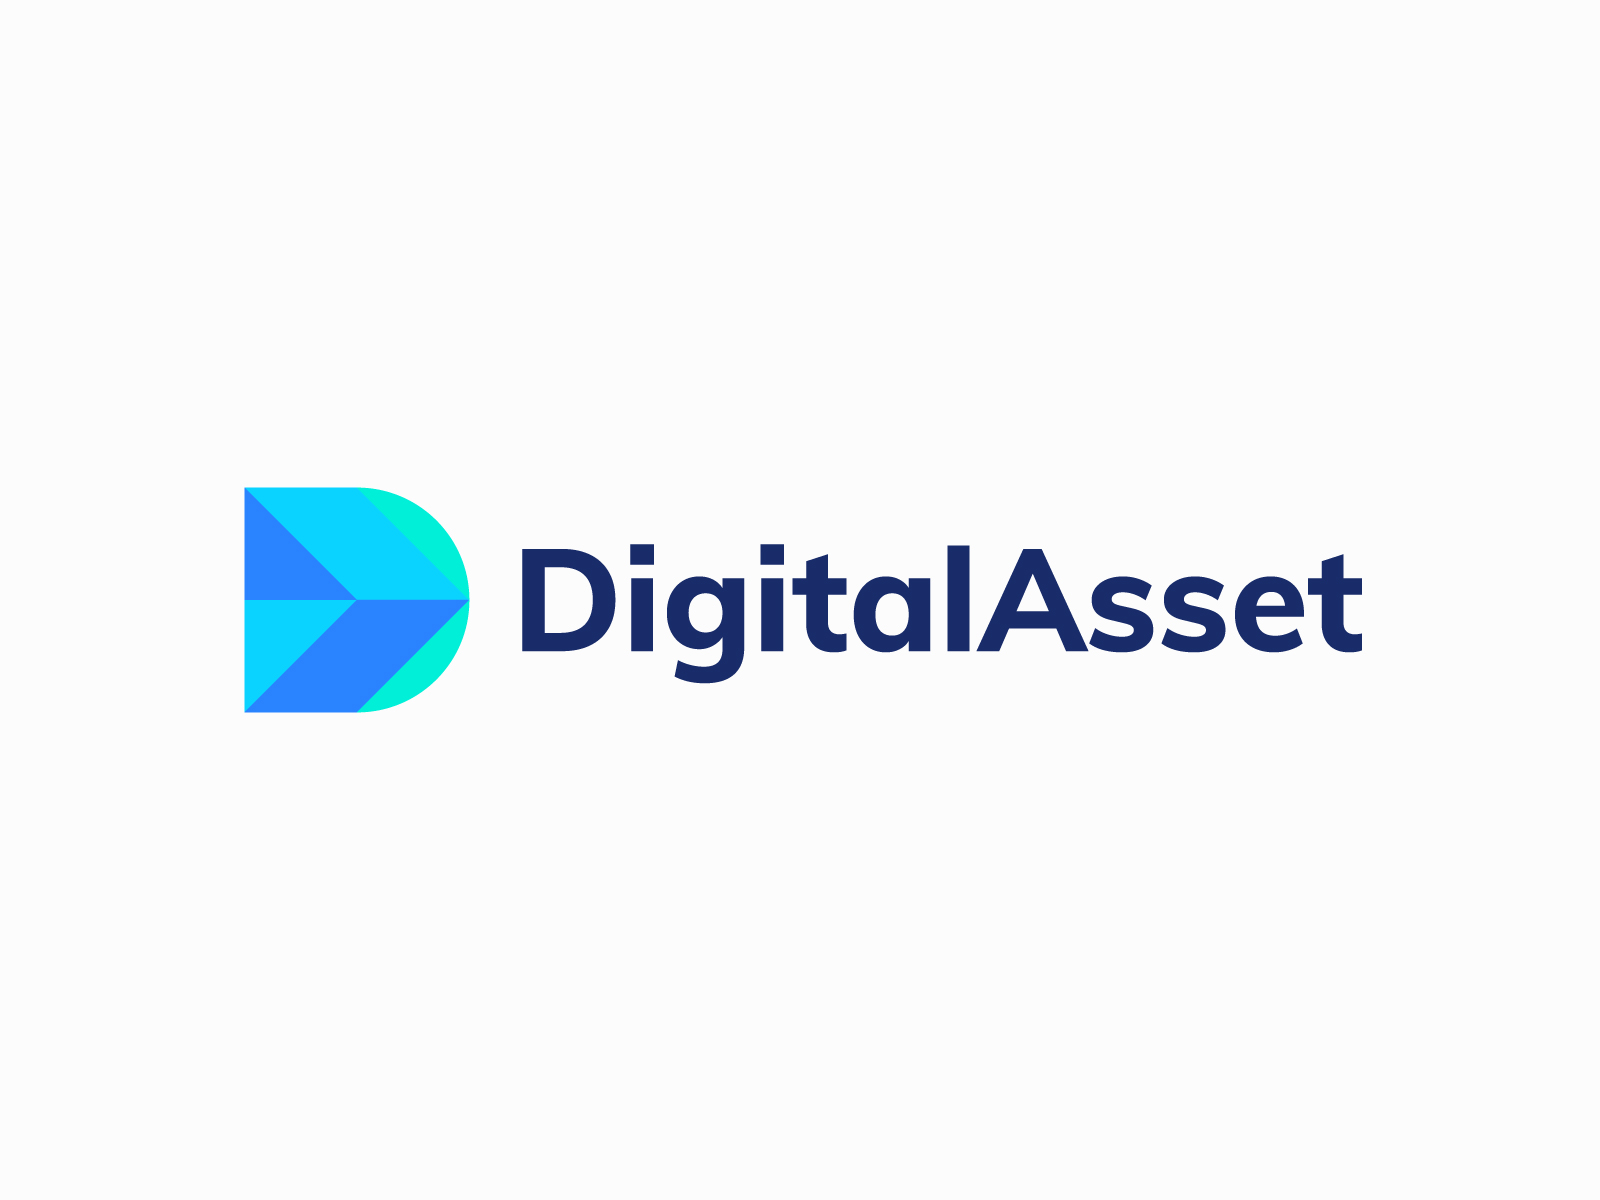 Digital Asset Logo Design by Elif Kameşoğlu on Dribbble